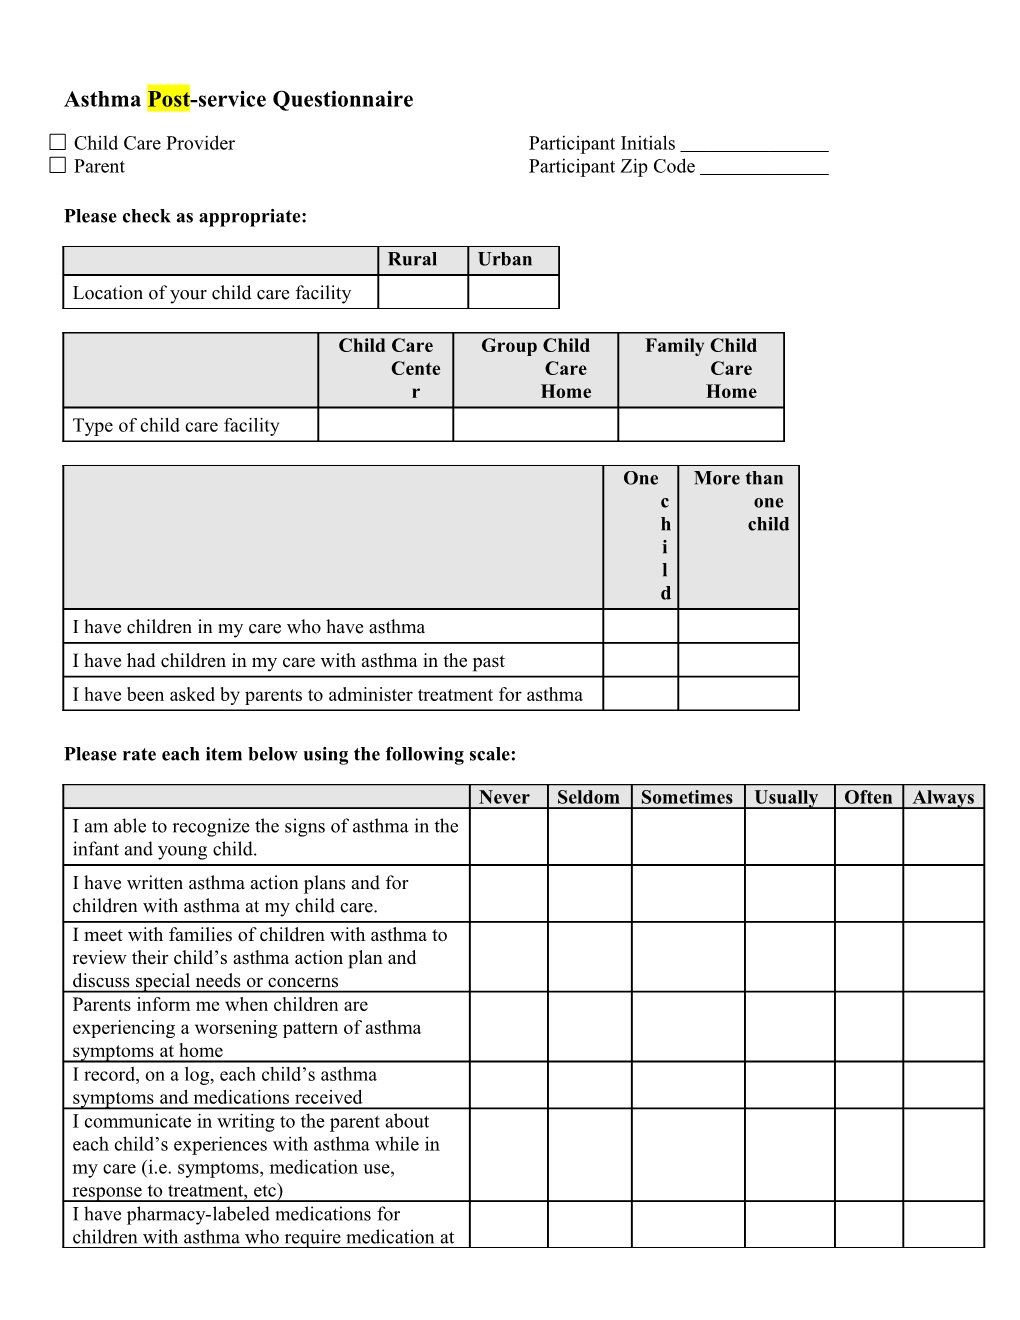 Asthma Pre-Service Questionnaire